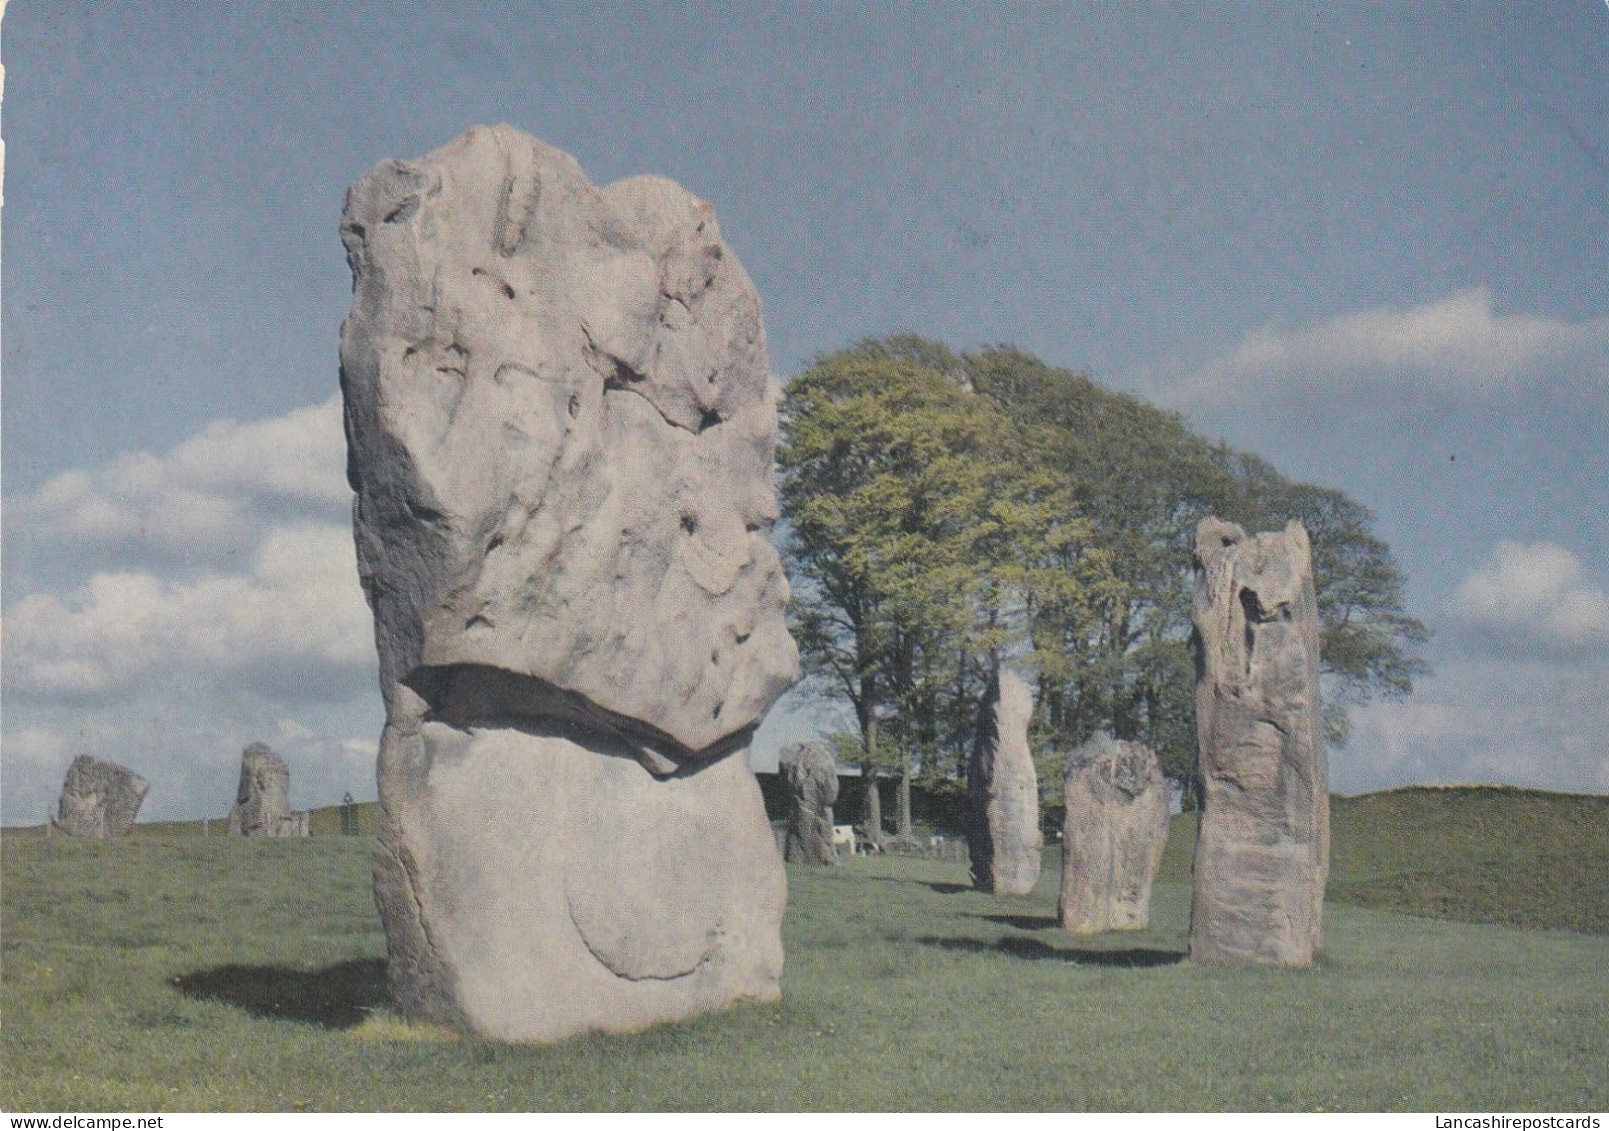 Postcard Avebury Wiltshire England Dolmen Menhirs Standing Stones PU 1973 My Ref B26435 - Dolmen & Menhire